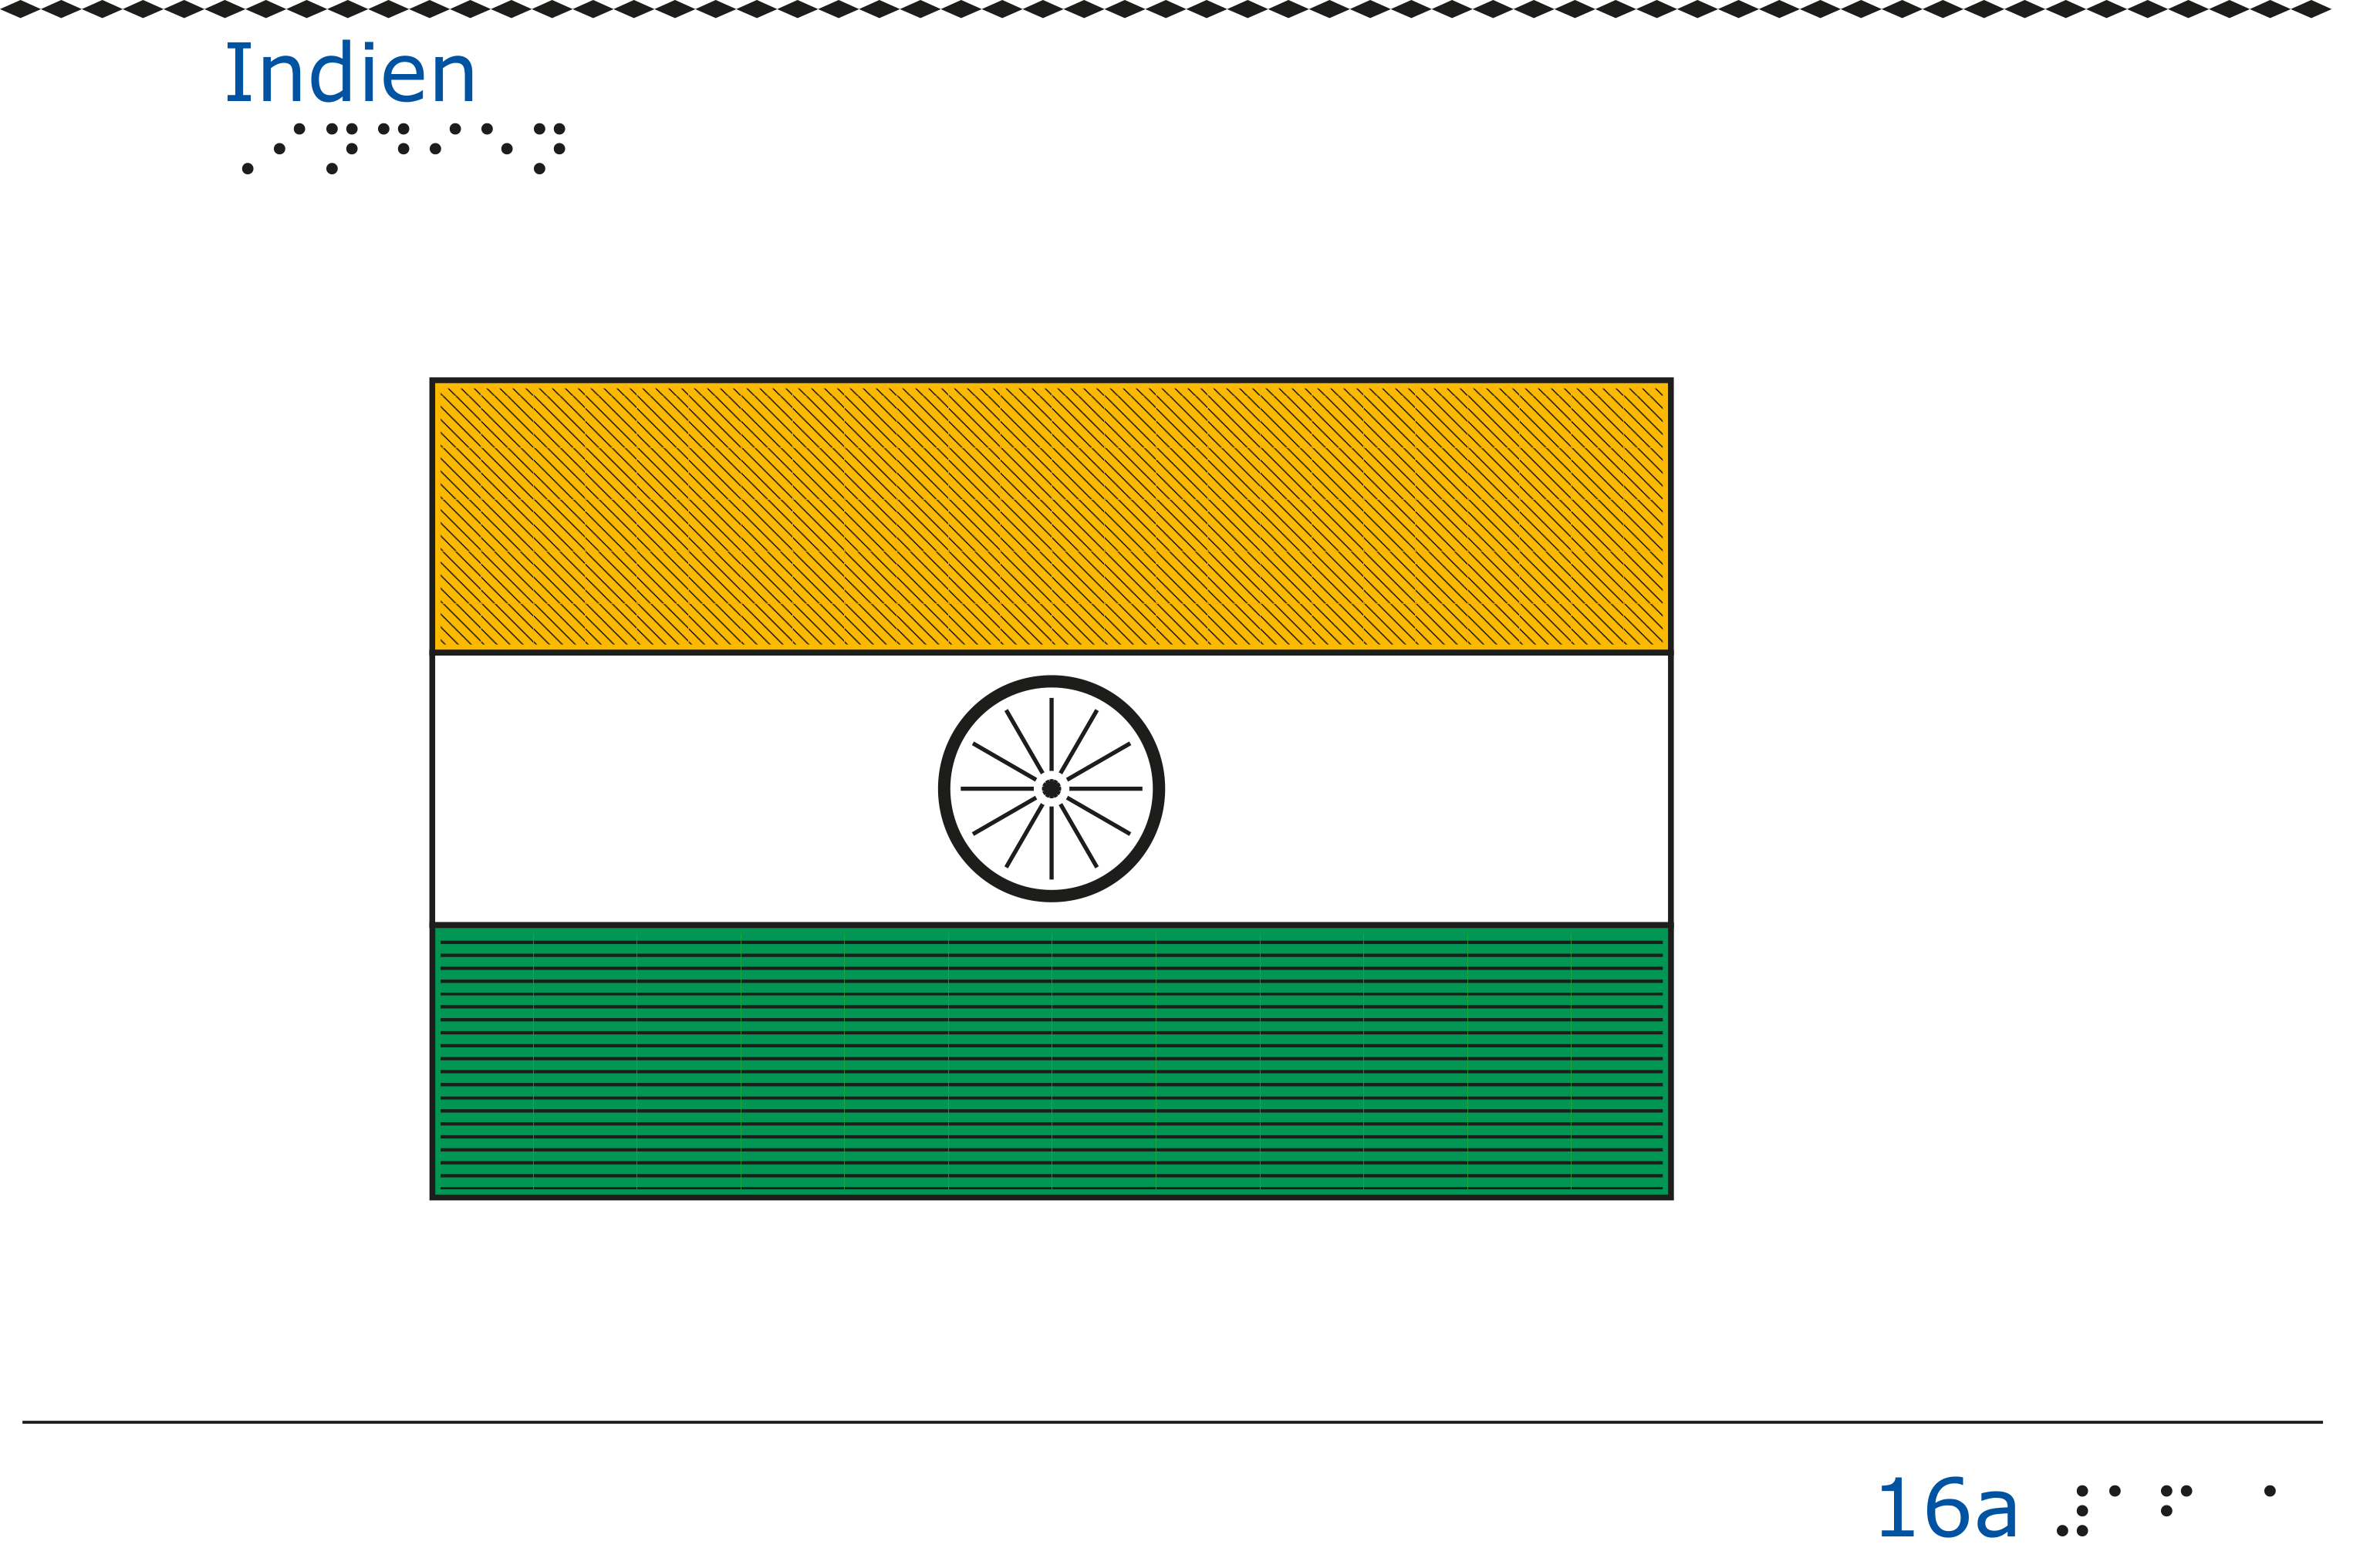 Taktil bild - Indiens flagga.